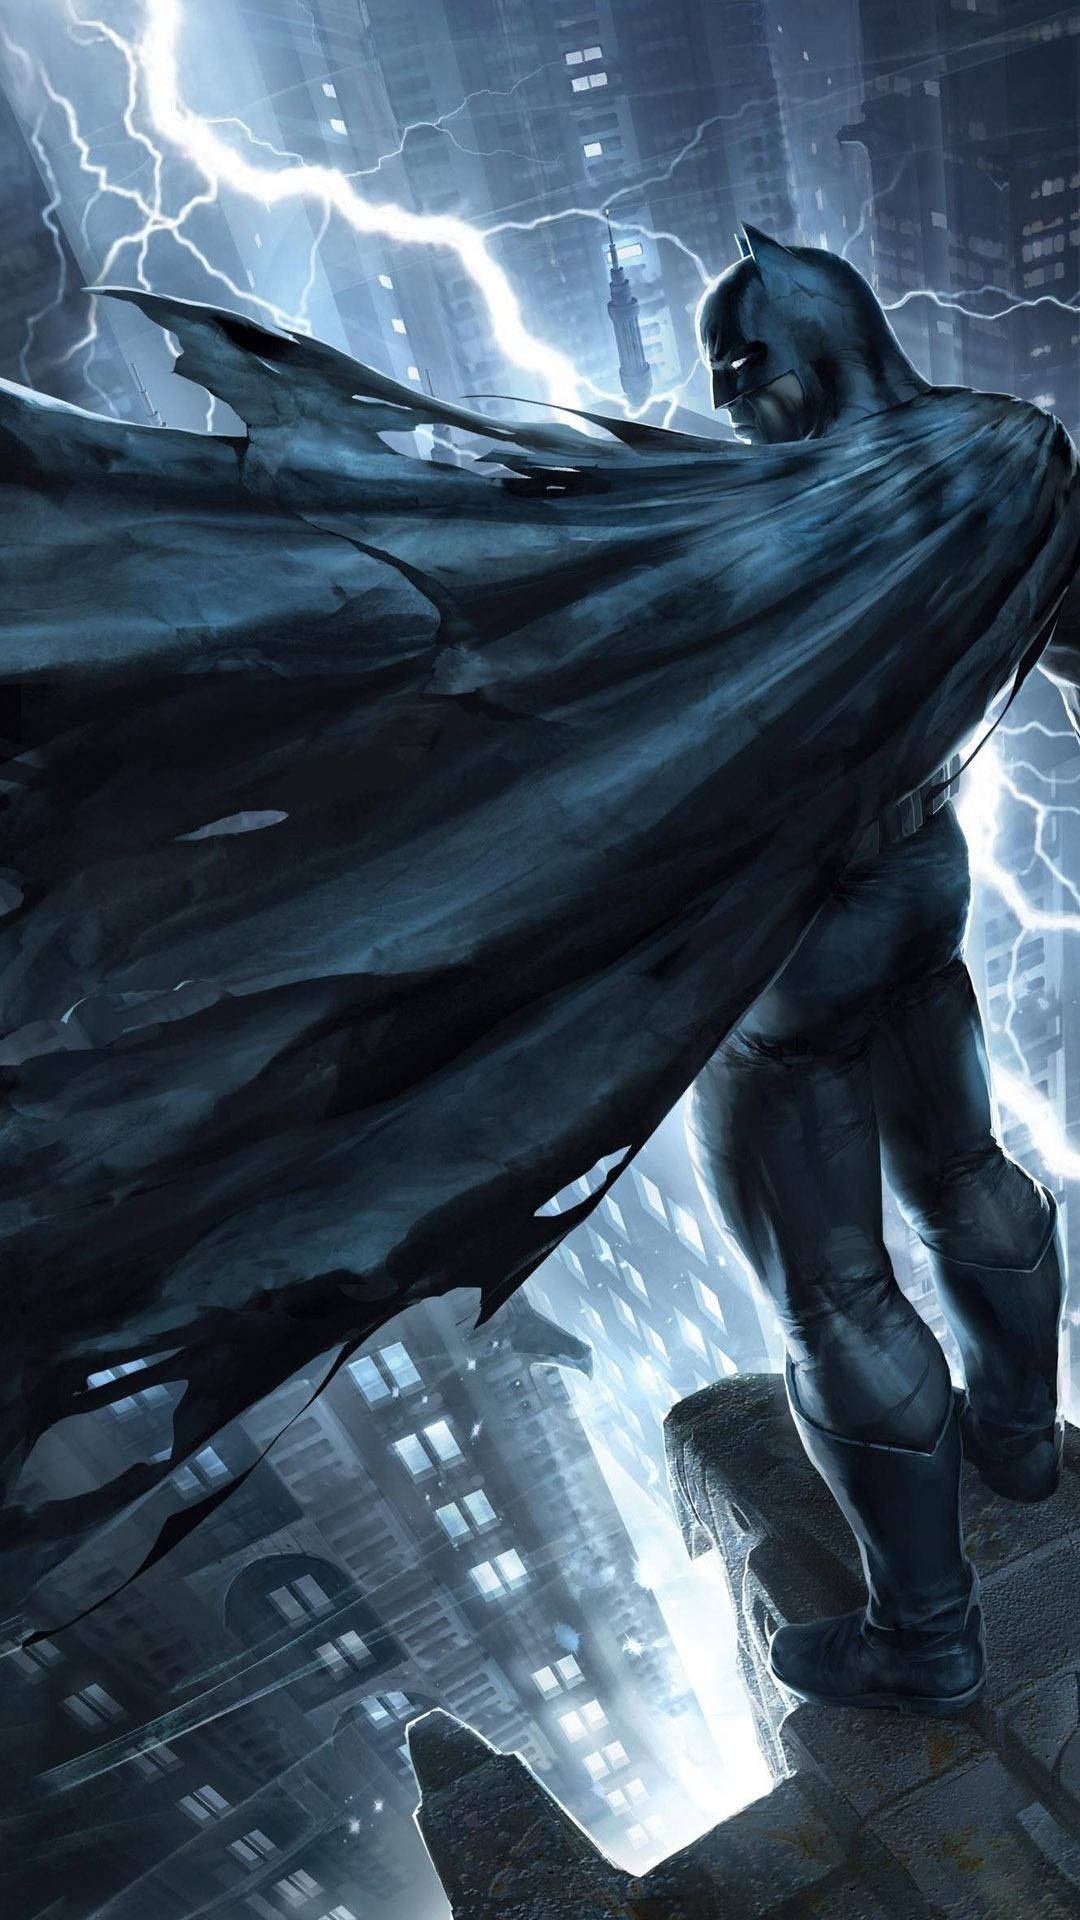 Batman Dark Knight Trilogy iPhone Wallpapers Free Download